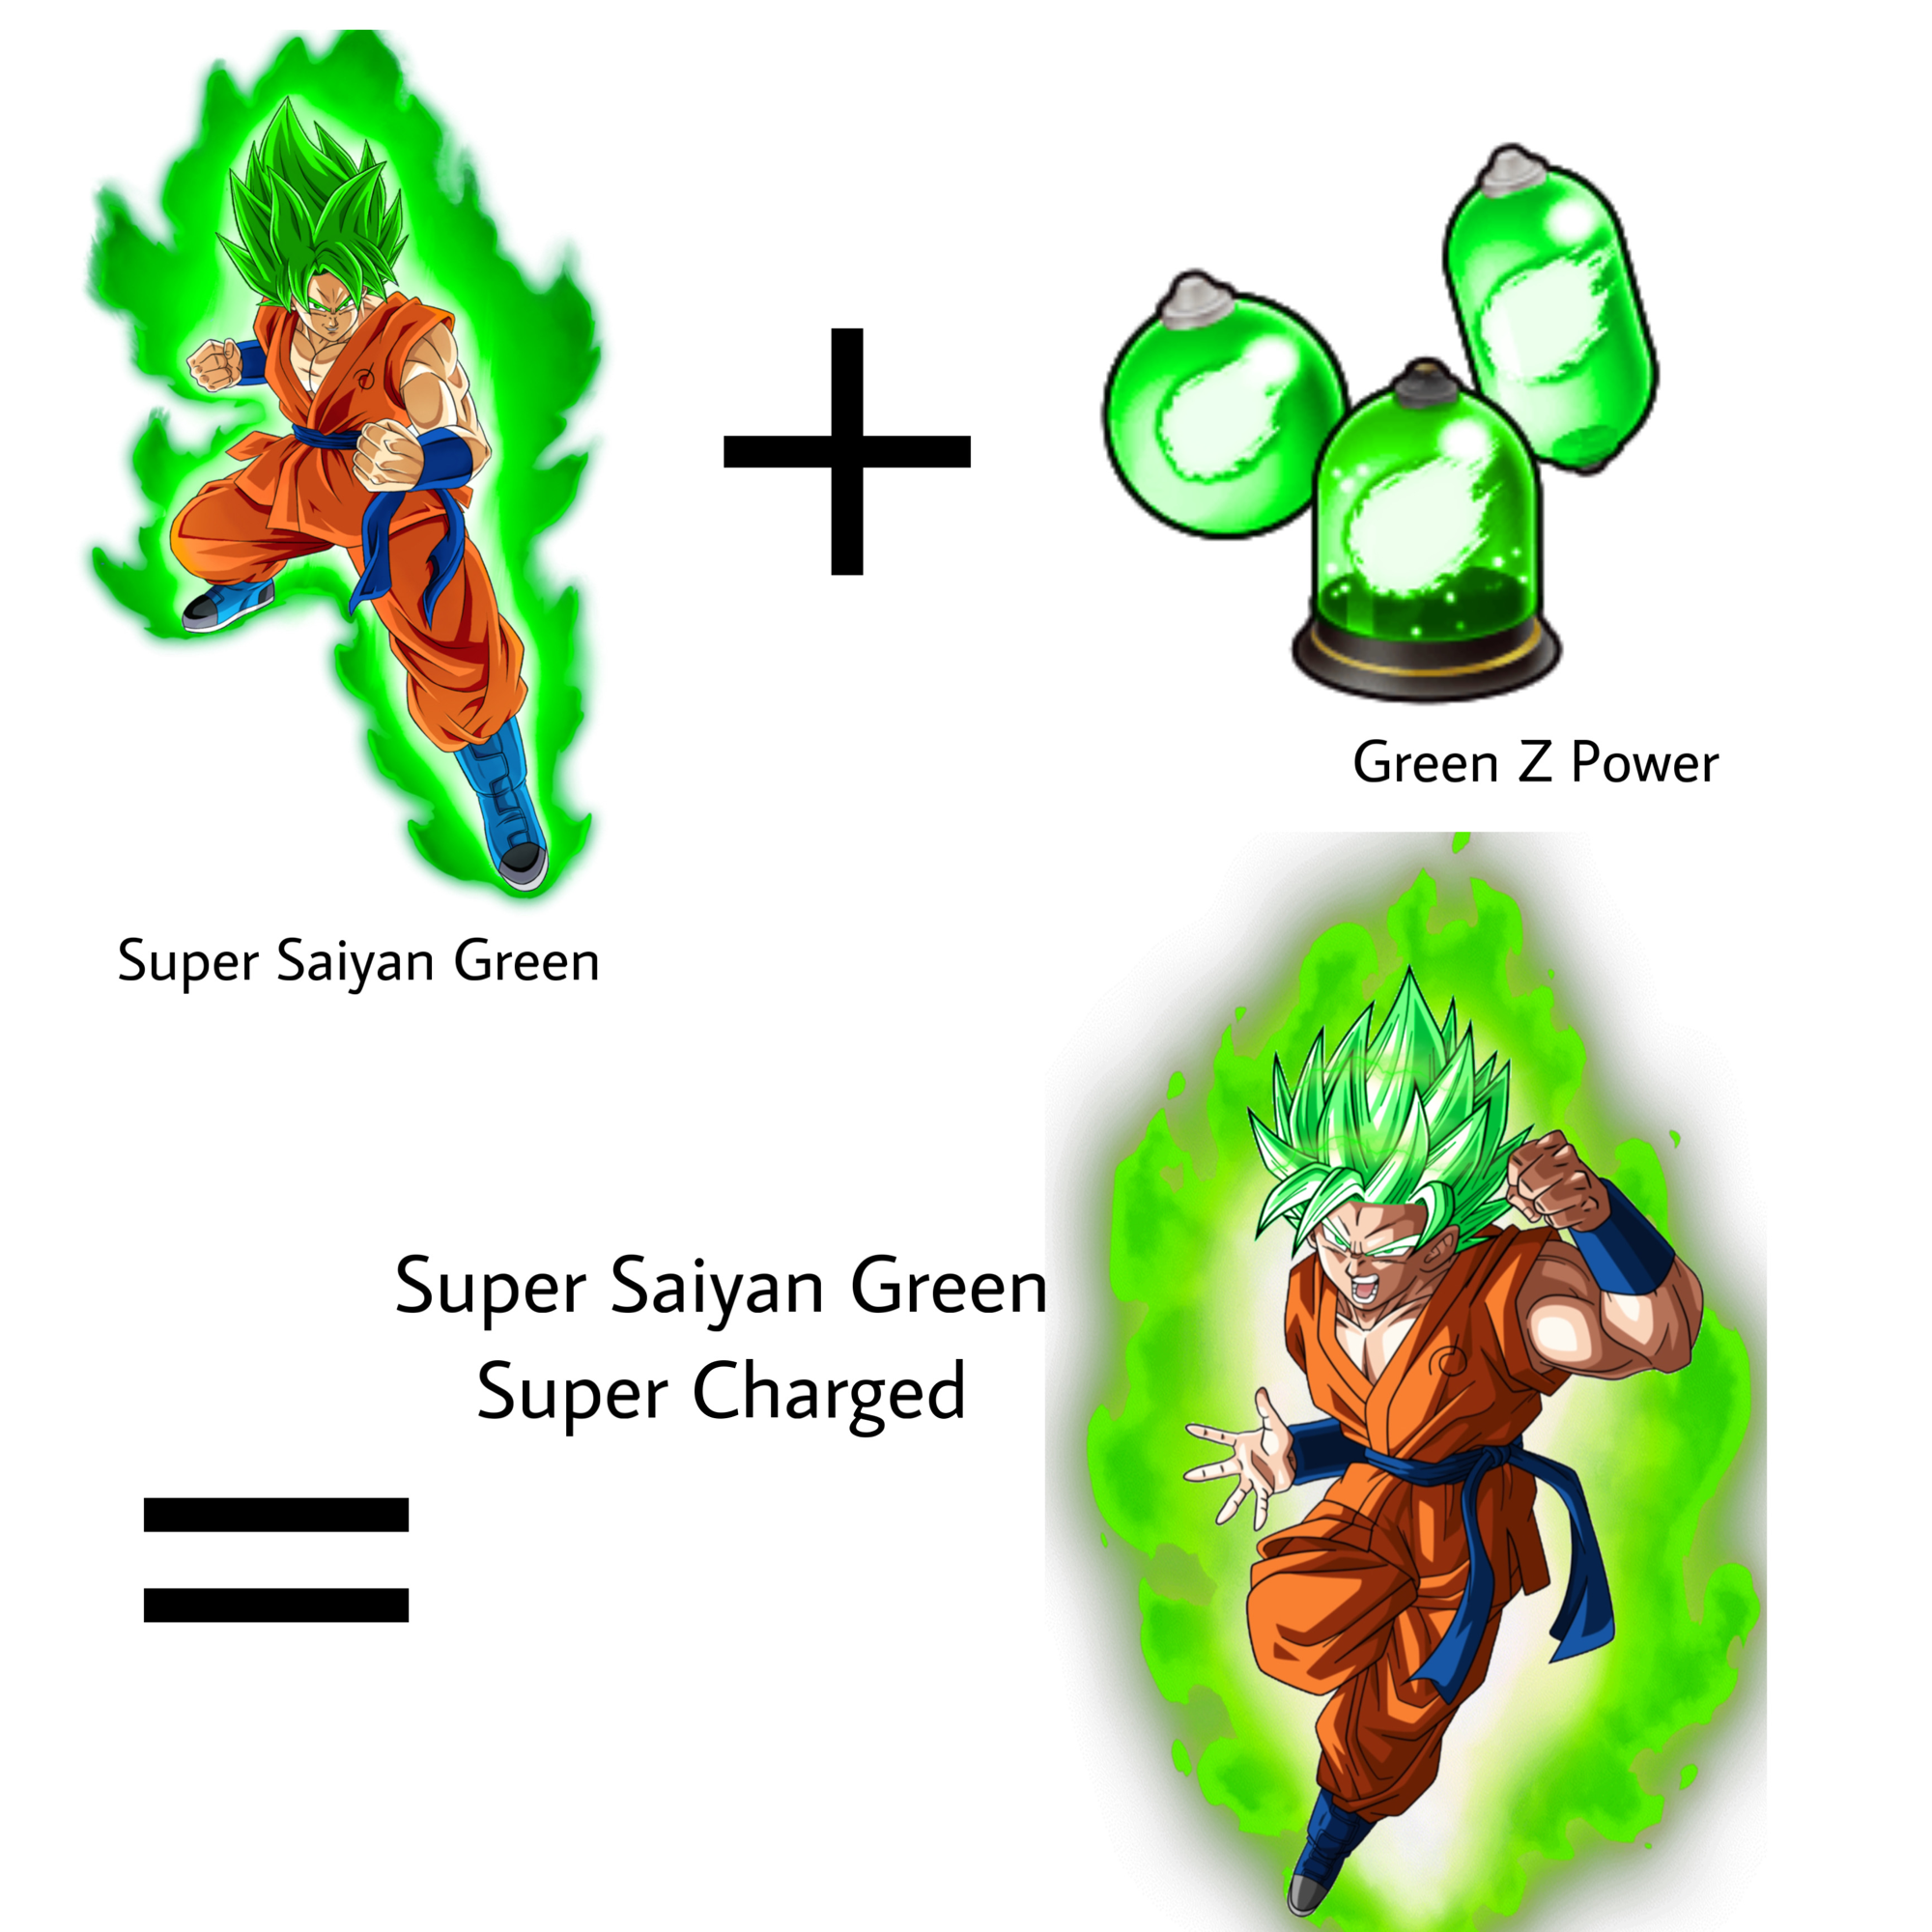 A Guide to Super Saiyan Green